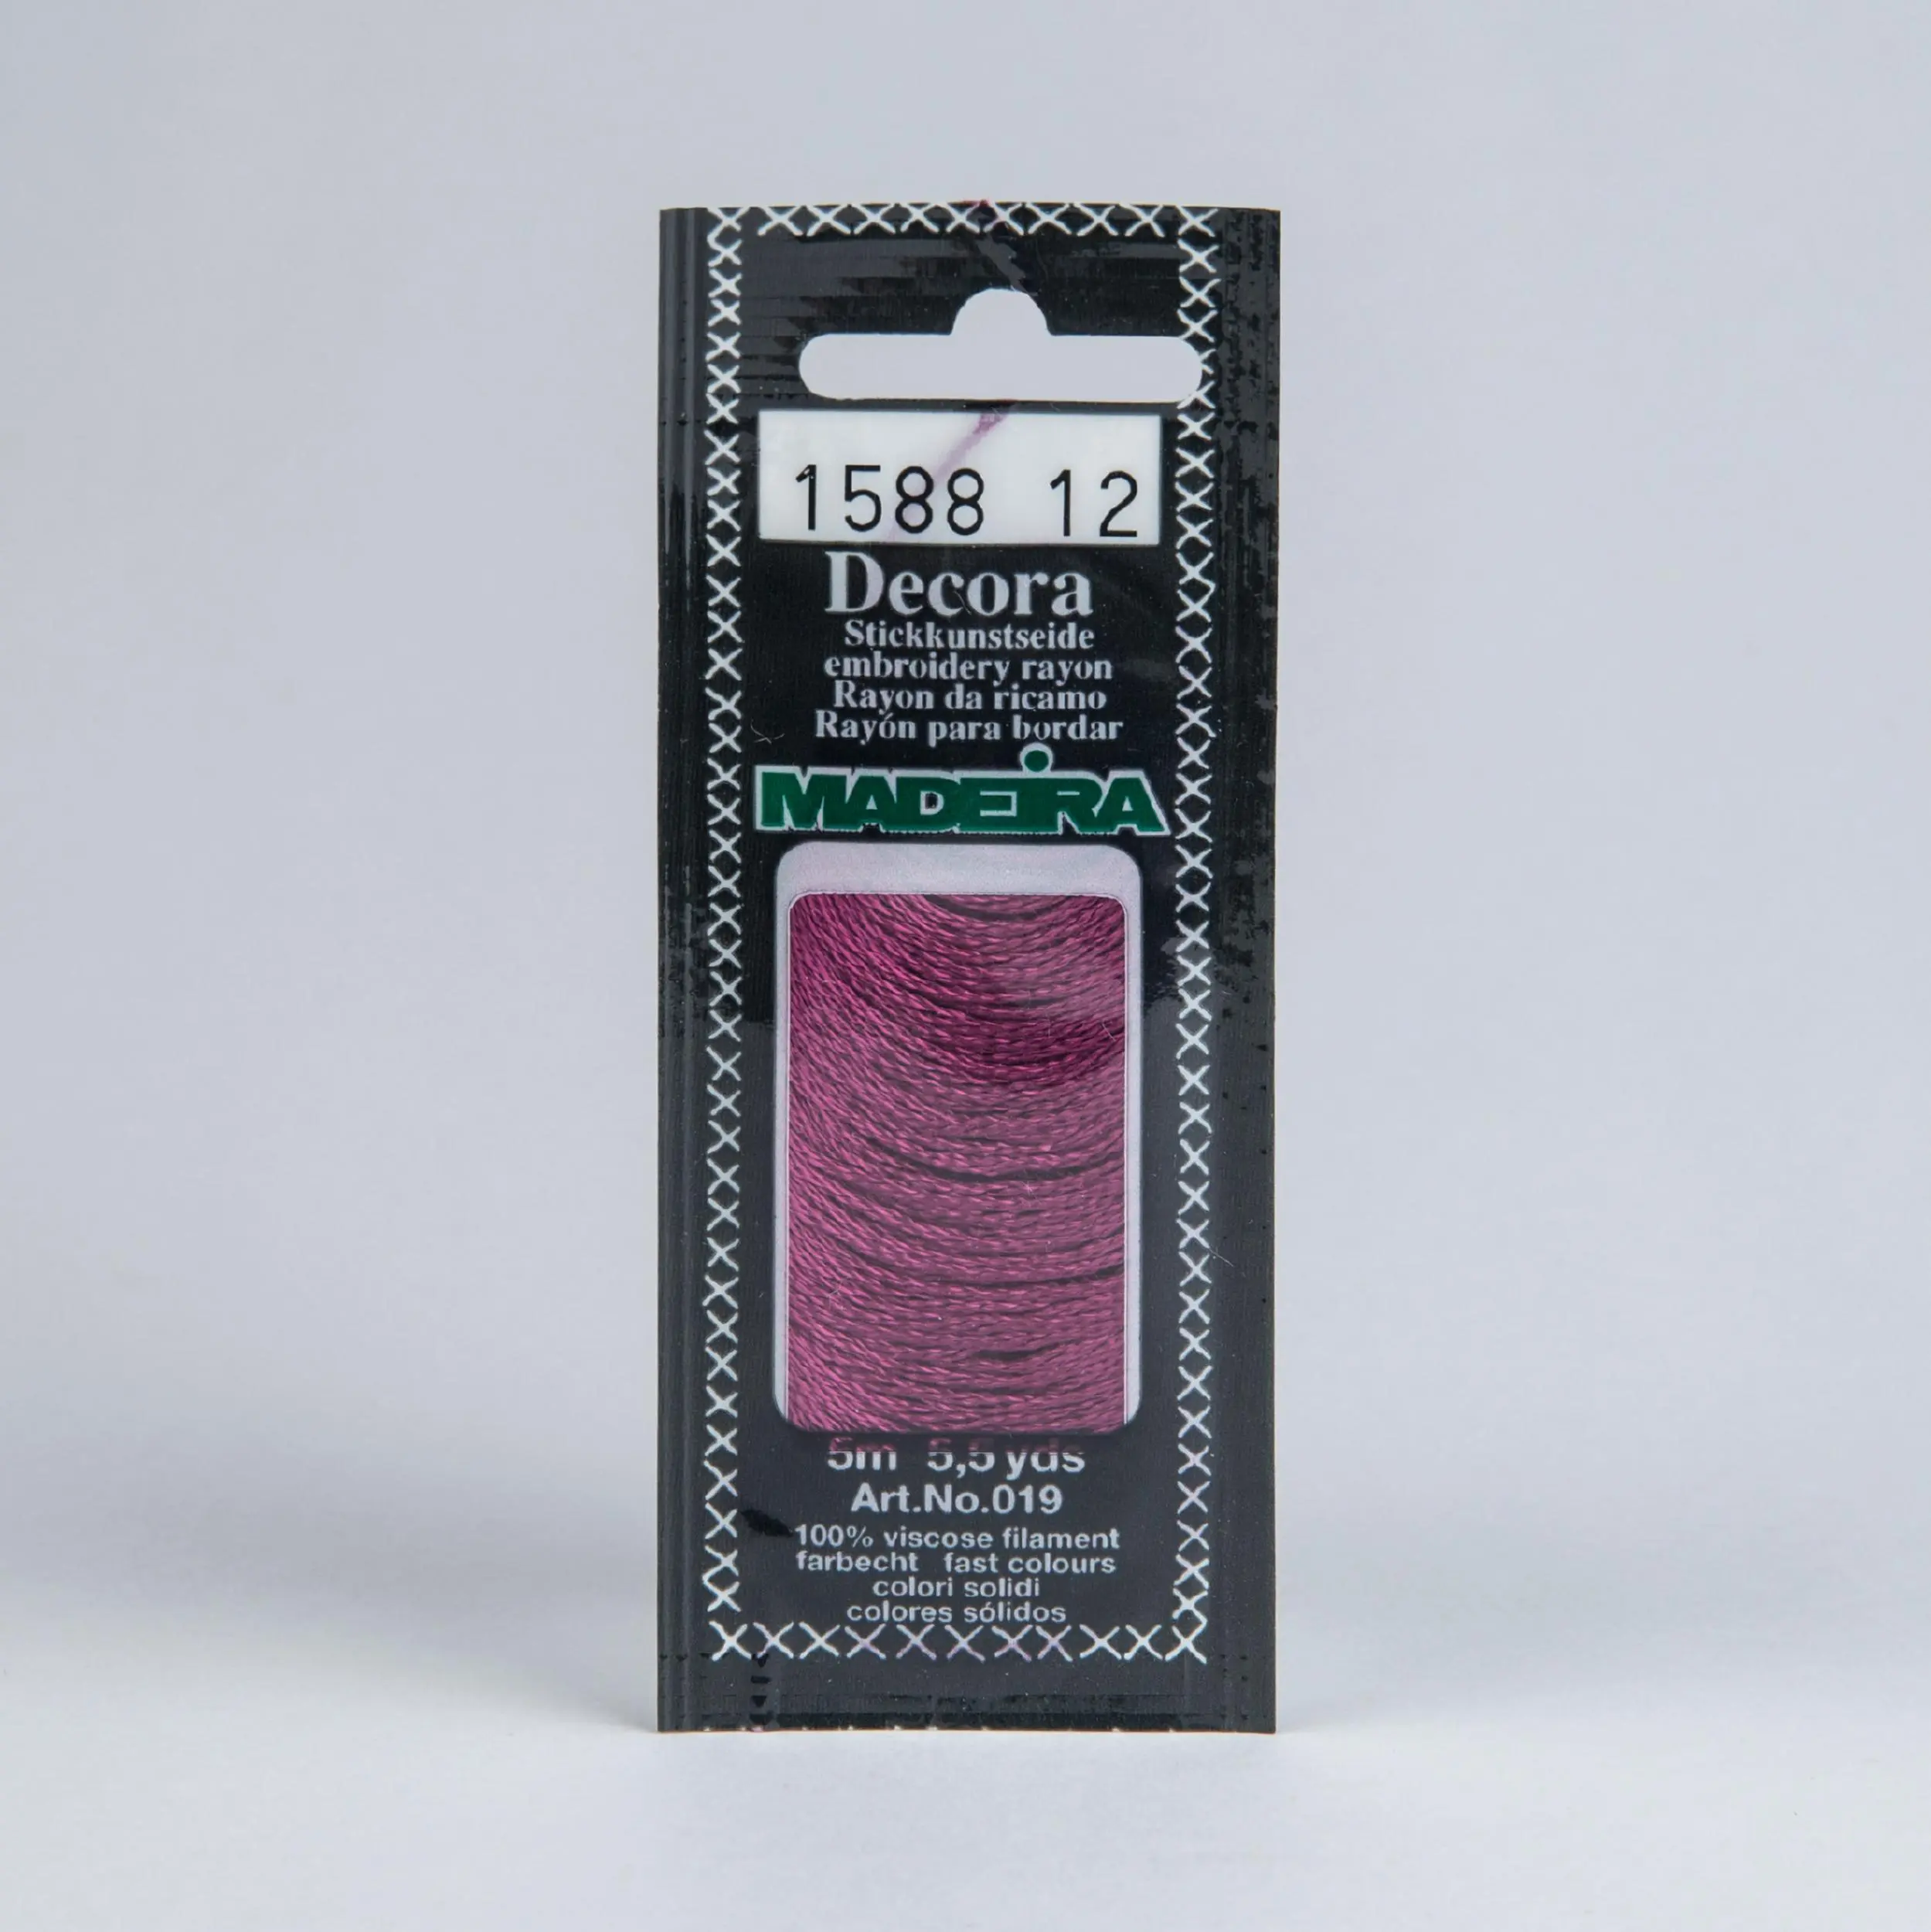 1588 Decora Madeira 5 m 4-х шарові філамент 100% віскоза